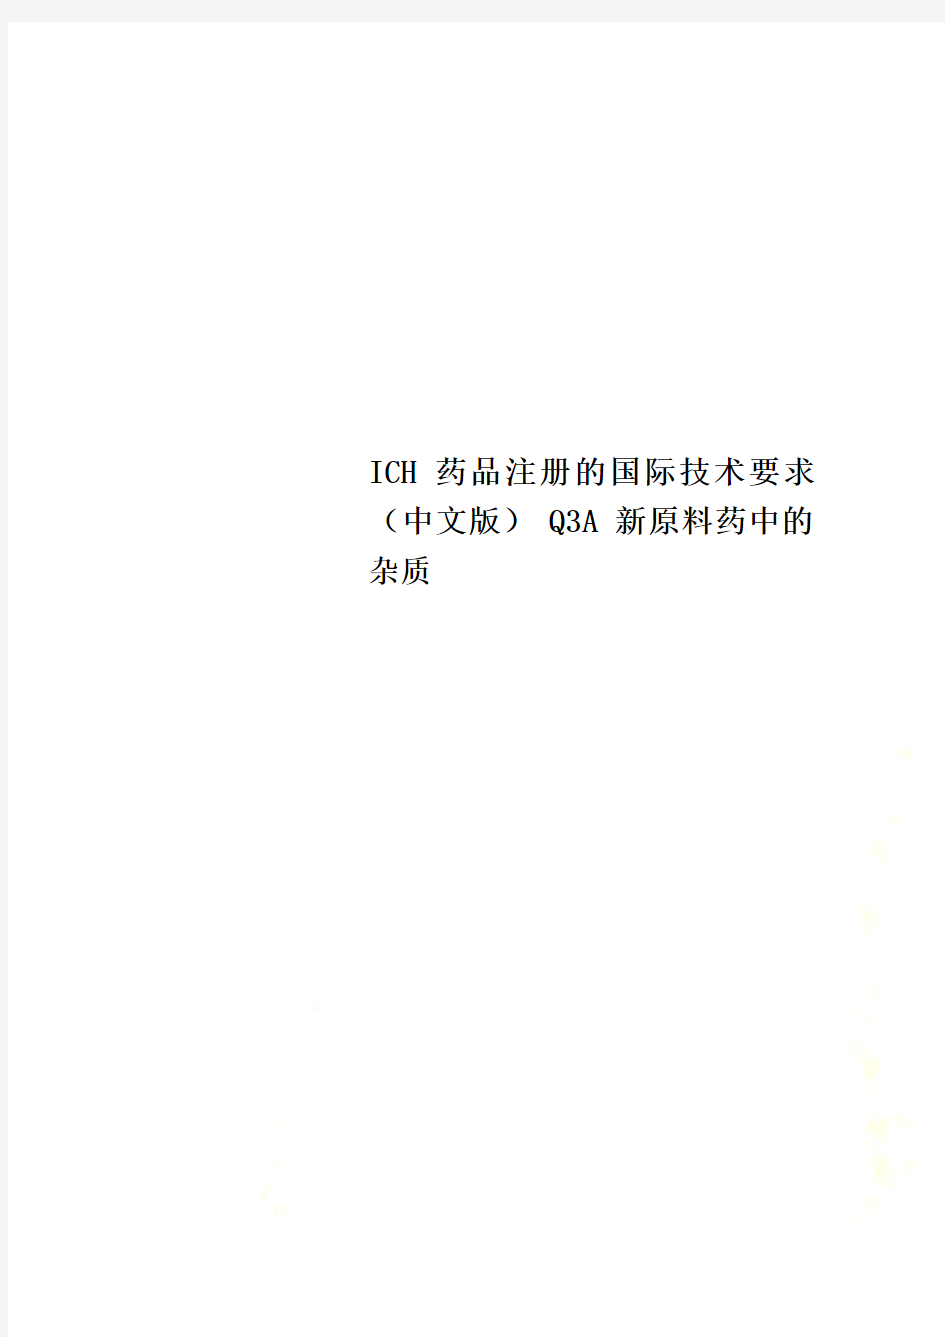 ICH 药品注册的国际技术要求(中文版) Q3A 新原料药中的杂质